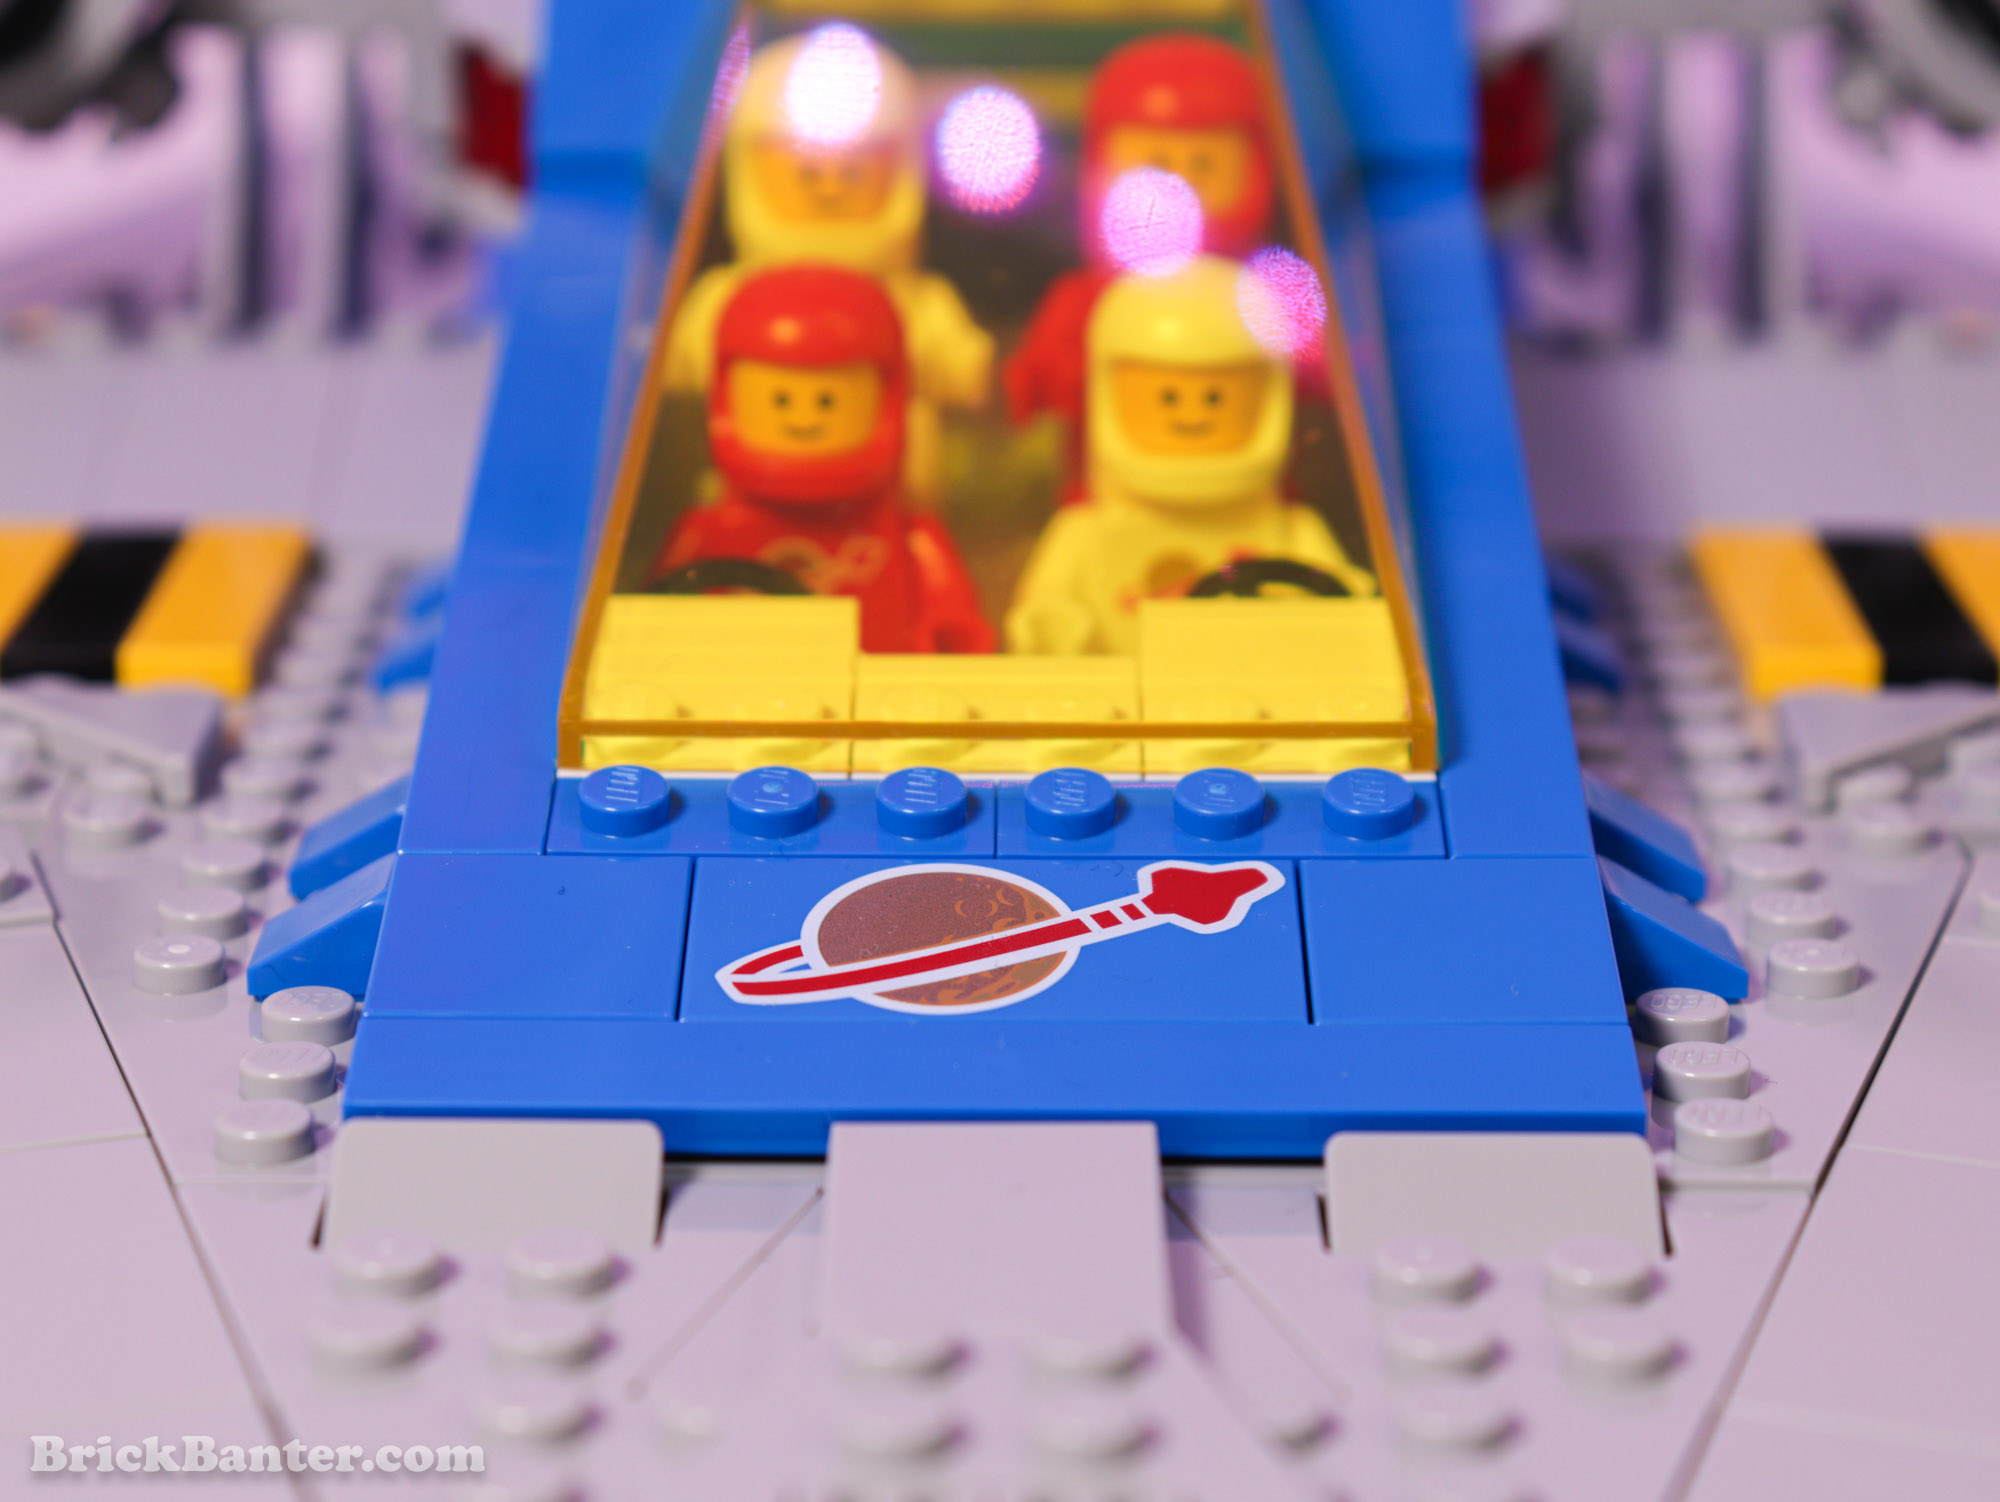 LEGO 10497 - Galaxy Explorer  - Classic Space returns - Full review Brickbanter.com